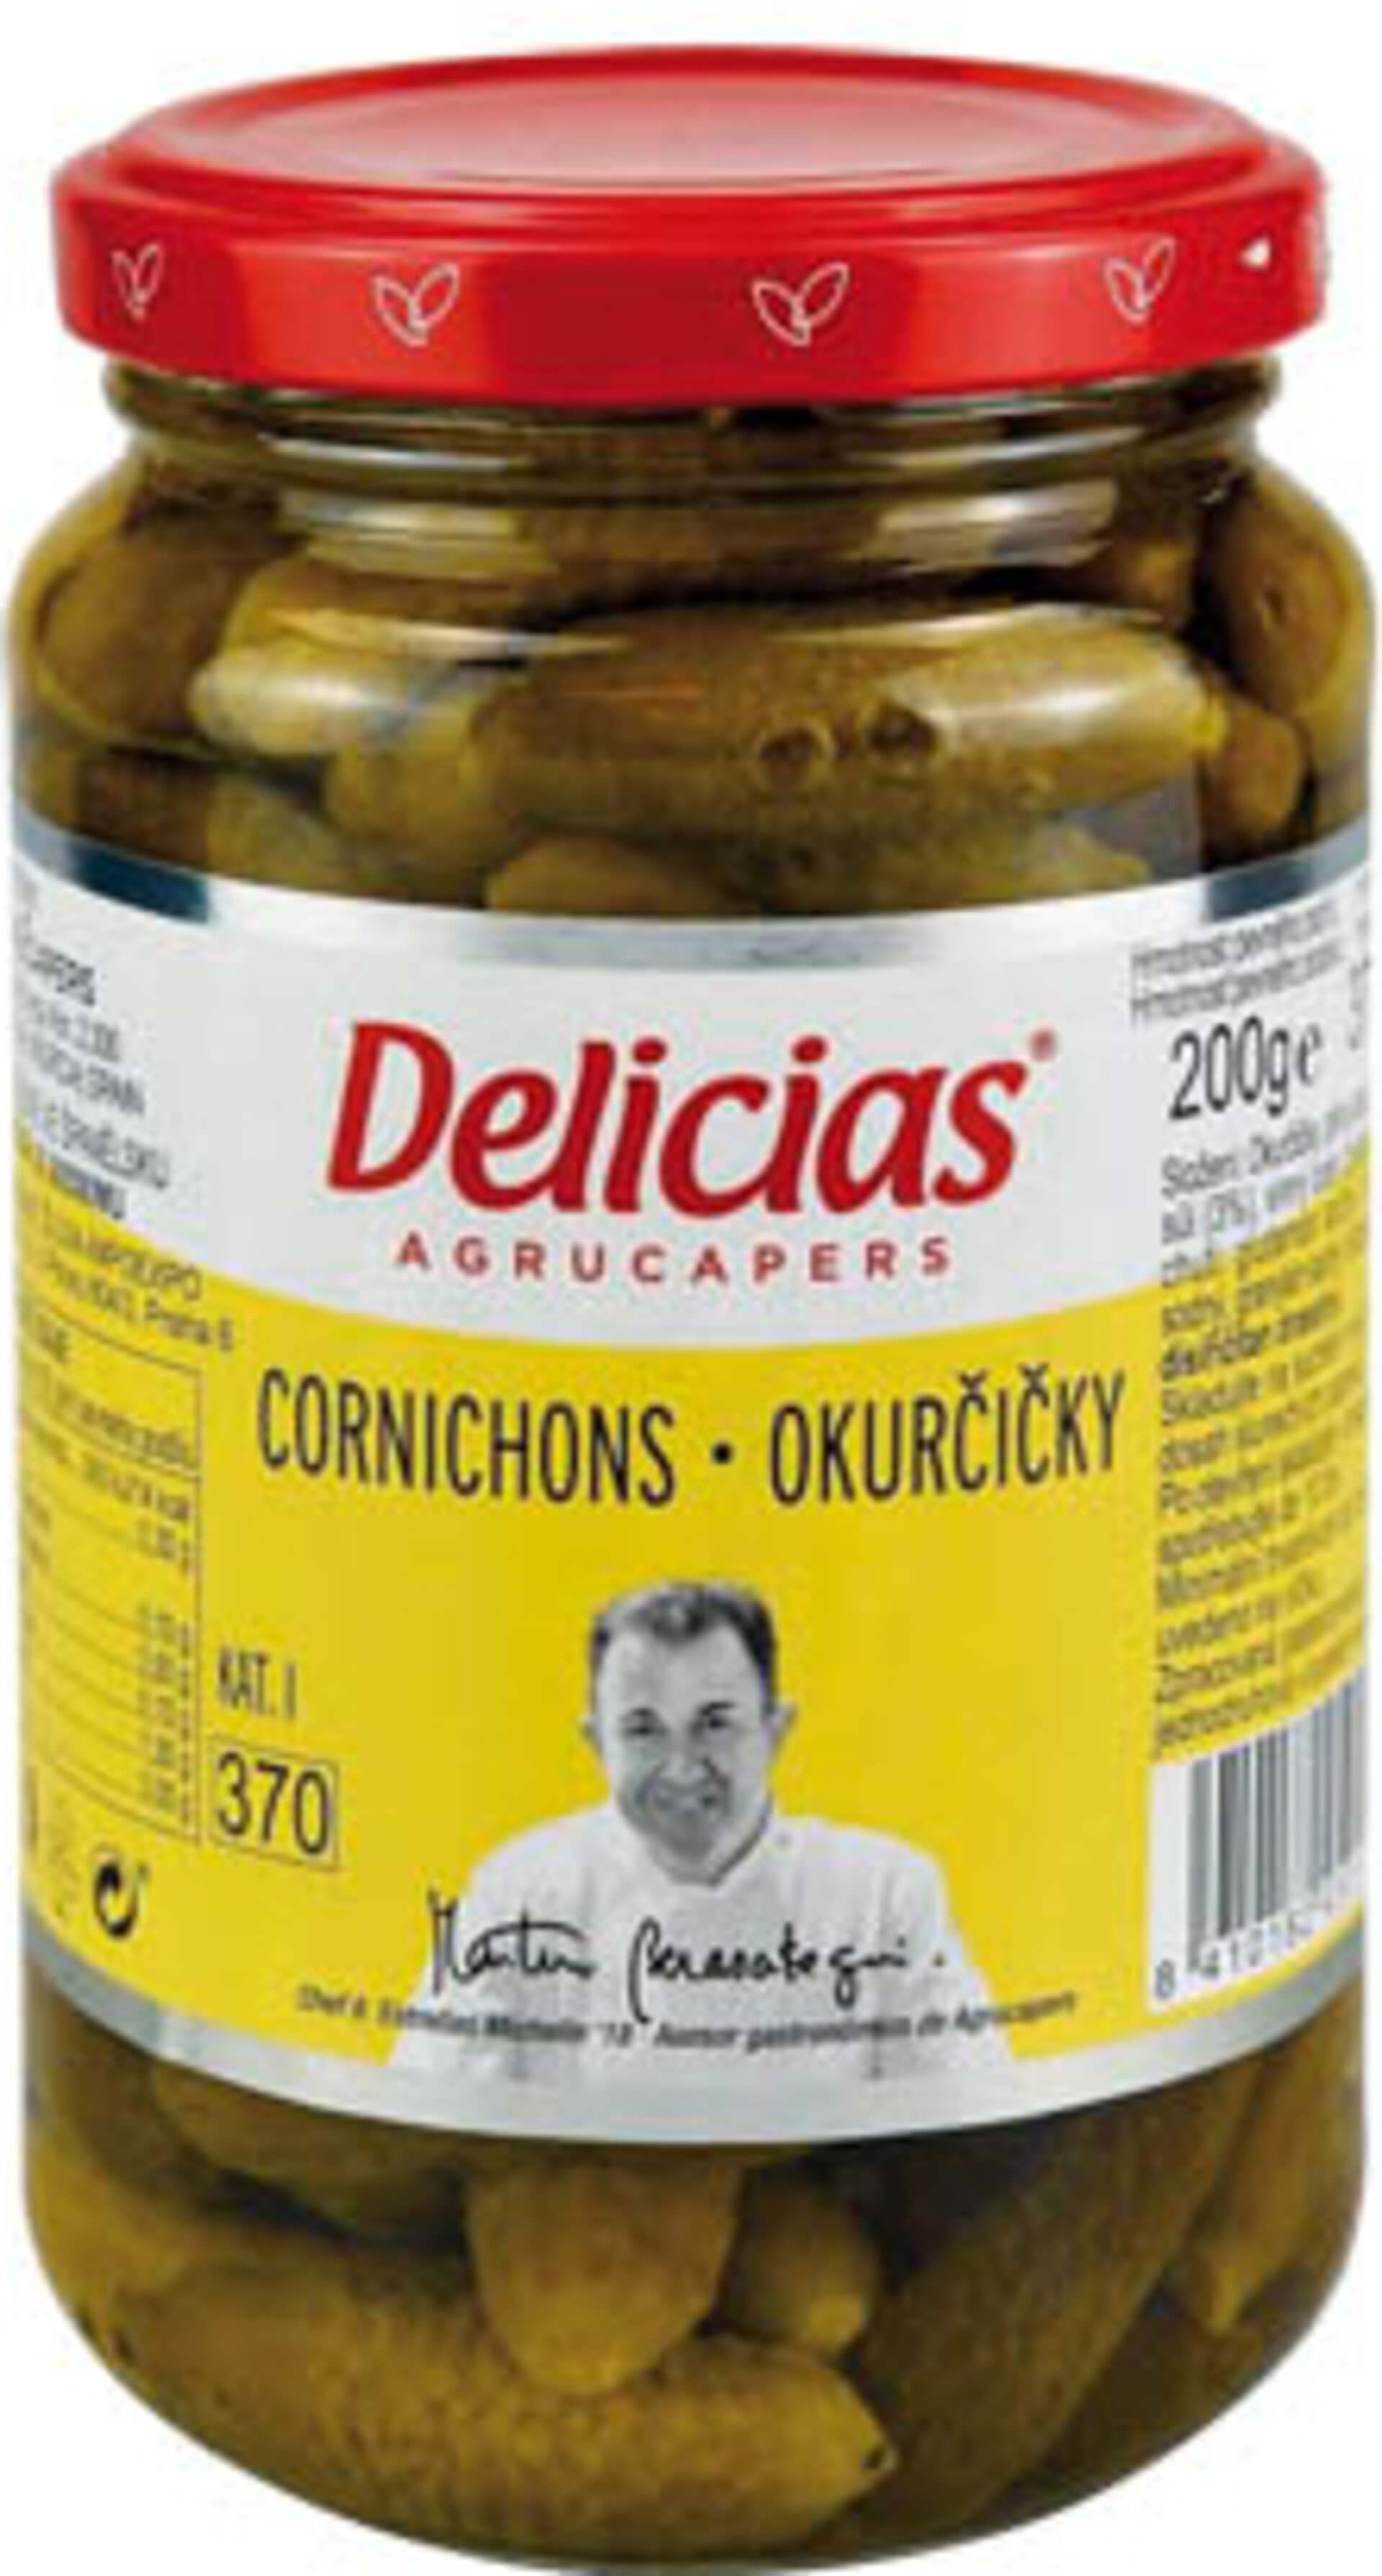 Delicias cornichons uhorčičky mini 370 ml